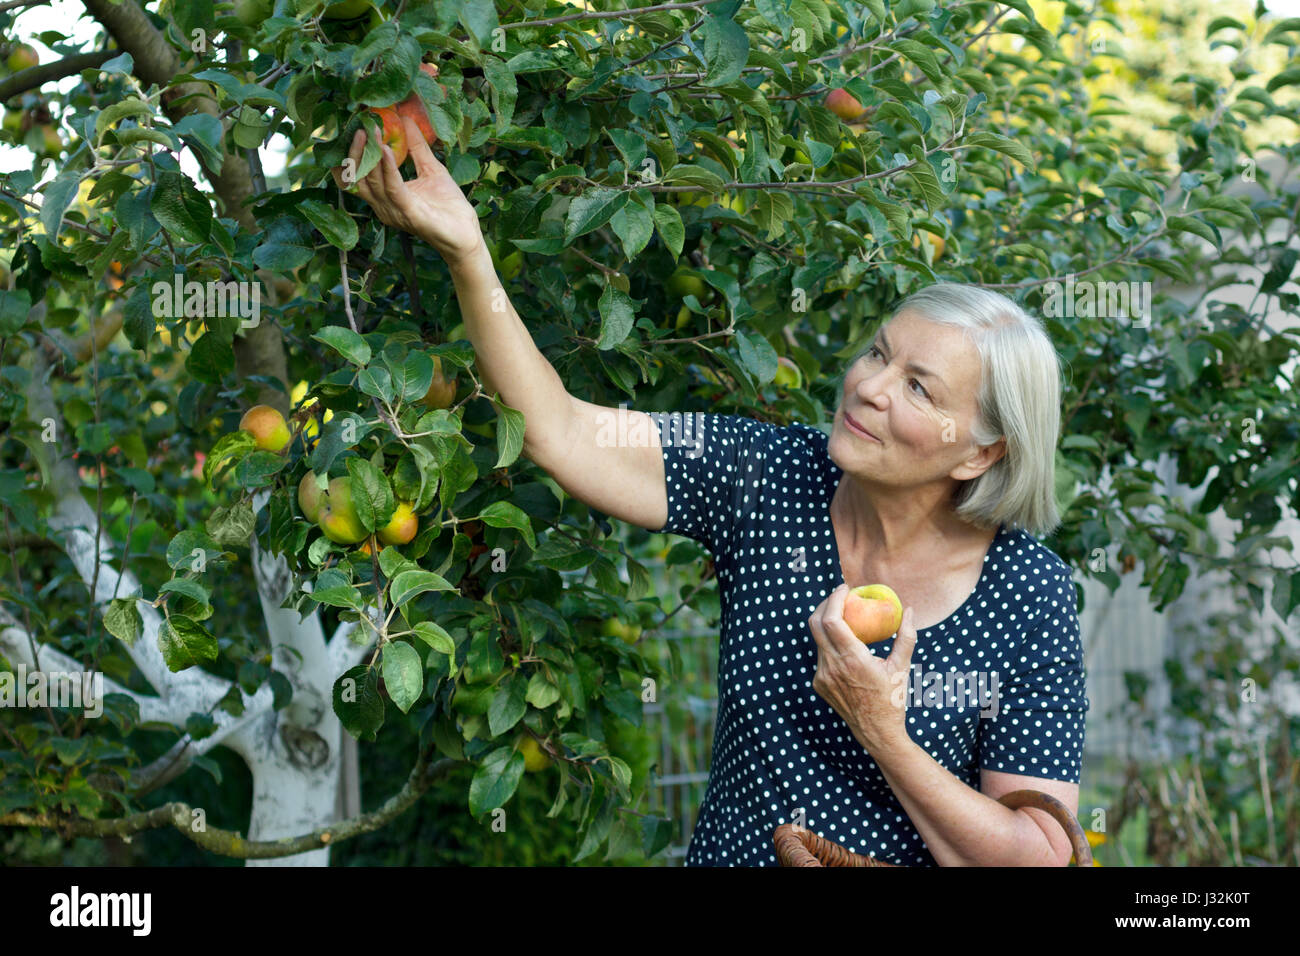 https://c8.alamy.com/comp/J32K0T/smiling-senior-woman-in-a-blue-polka-dotted-dress-picking-ripe-apples-J32K0T.jpg